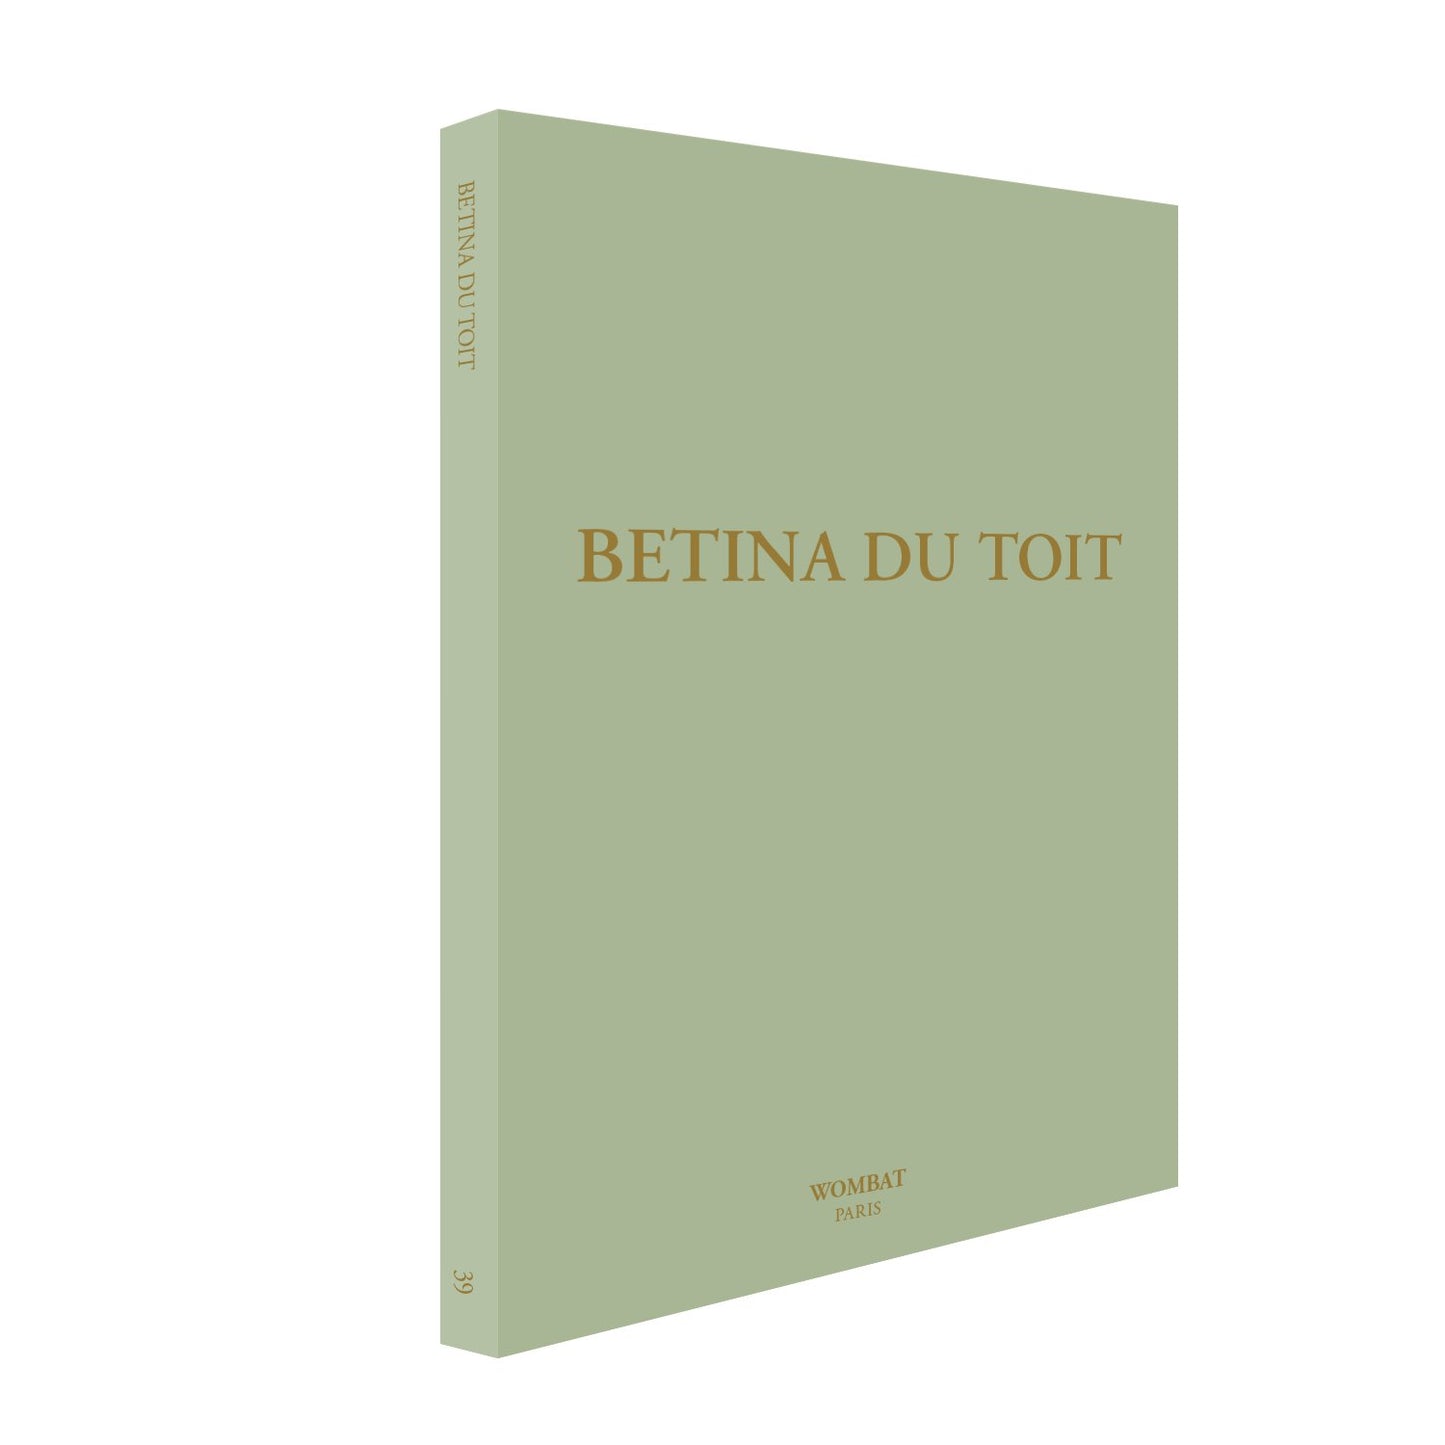 Artist Box 39 - Betina du Toit